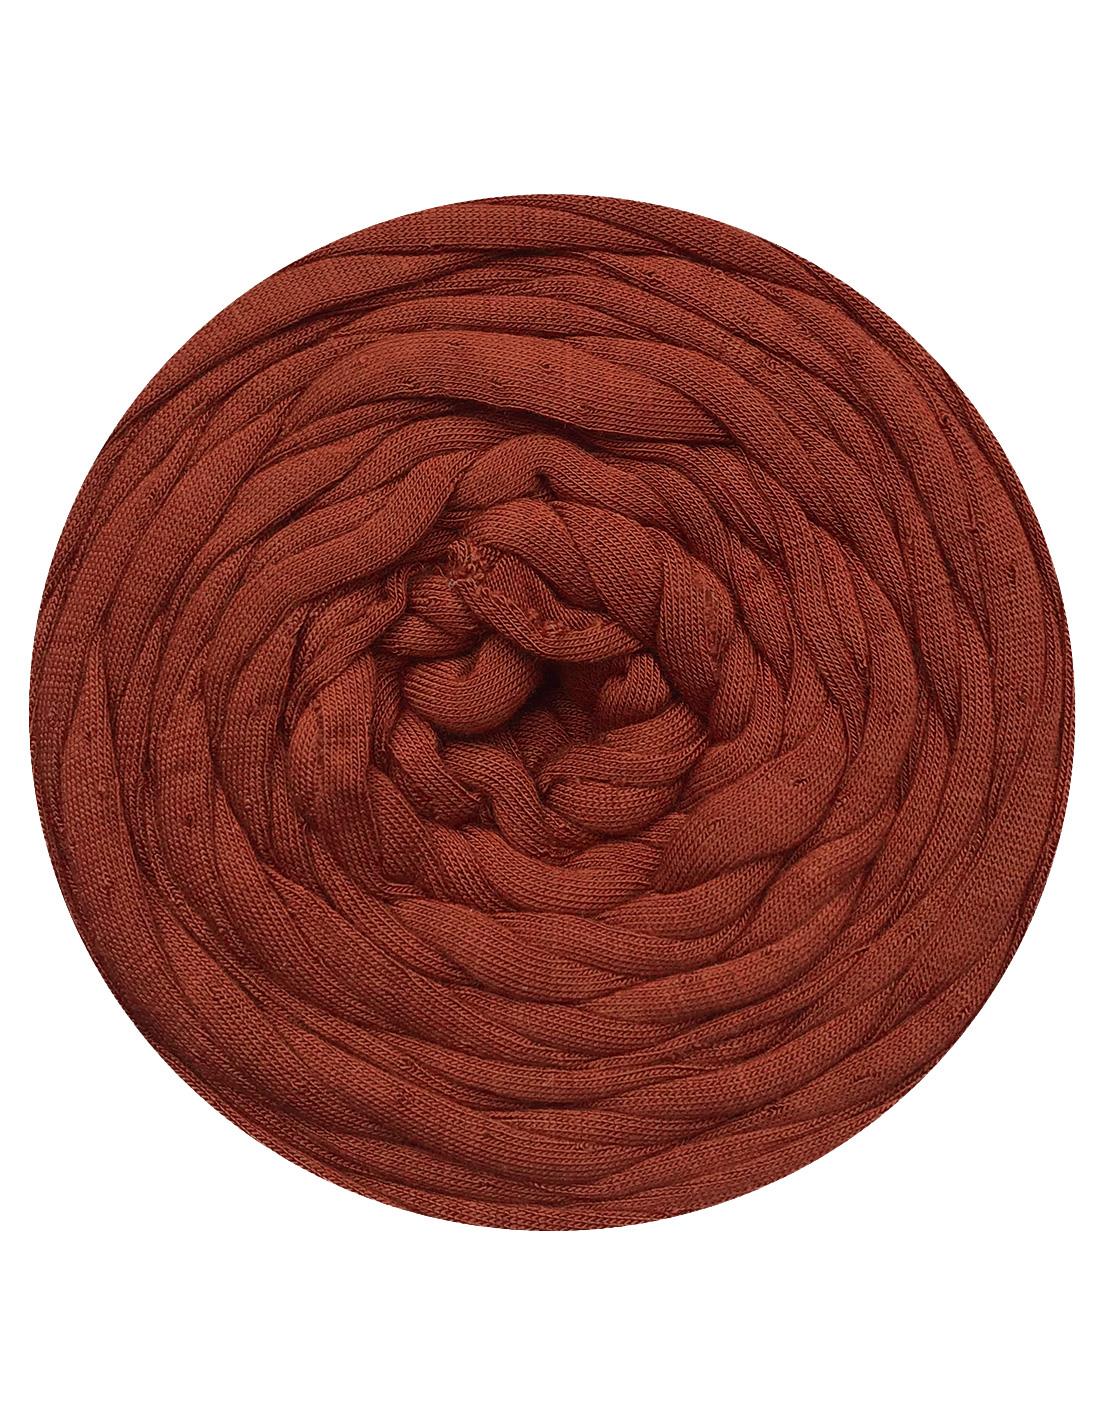 Light cinnamon brown t-shirt yarn (100-120m)